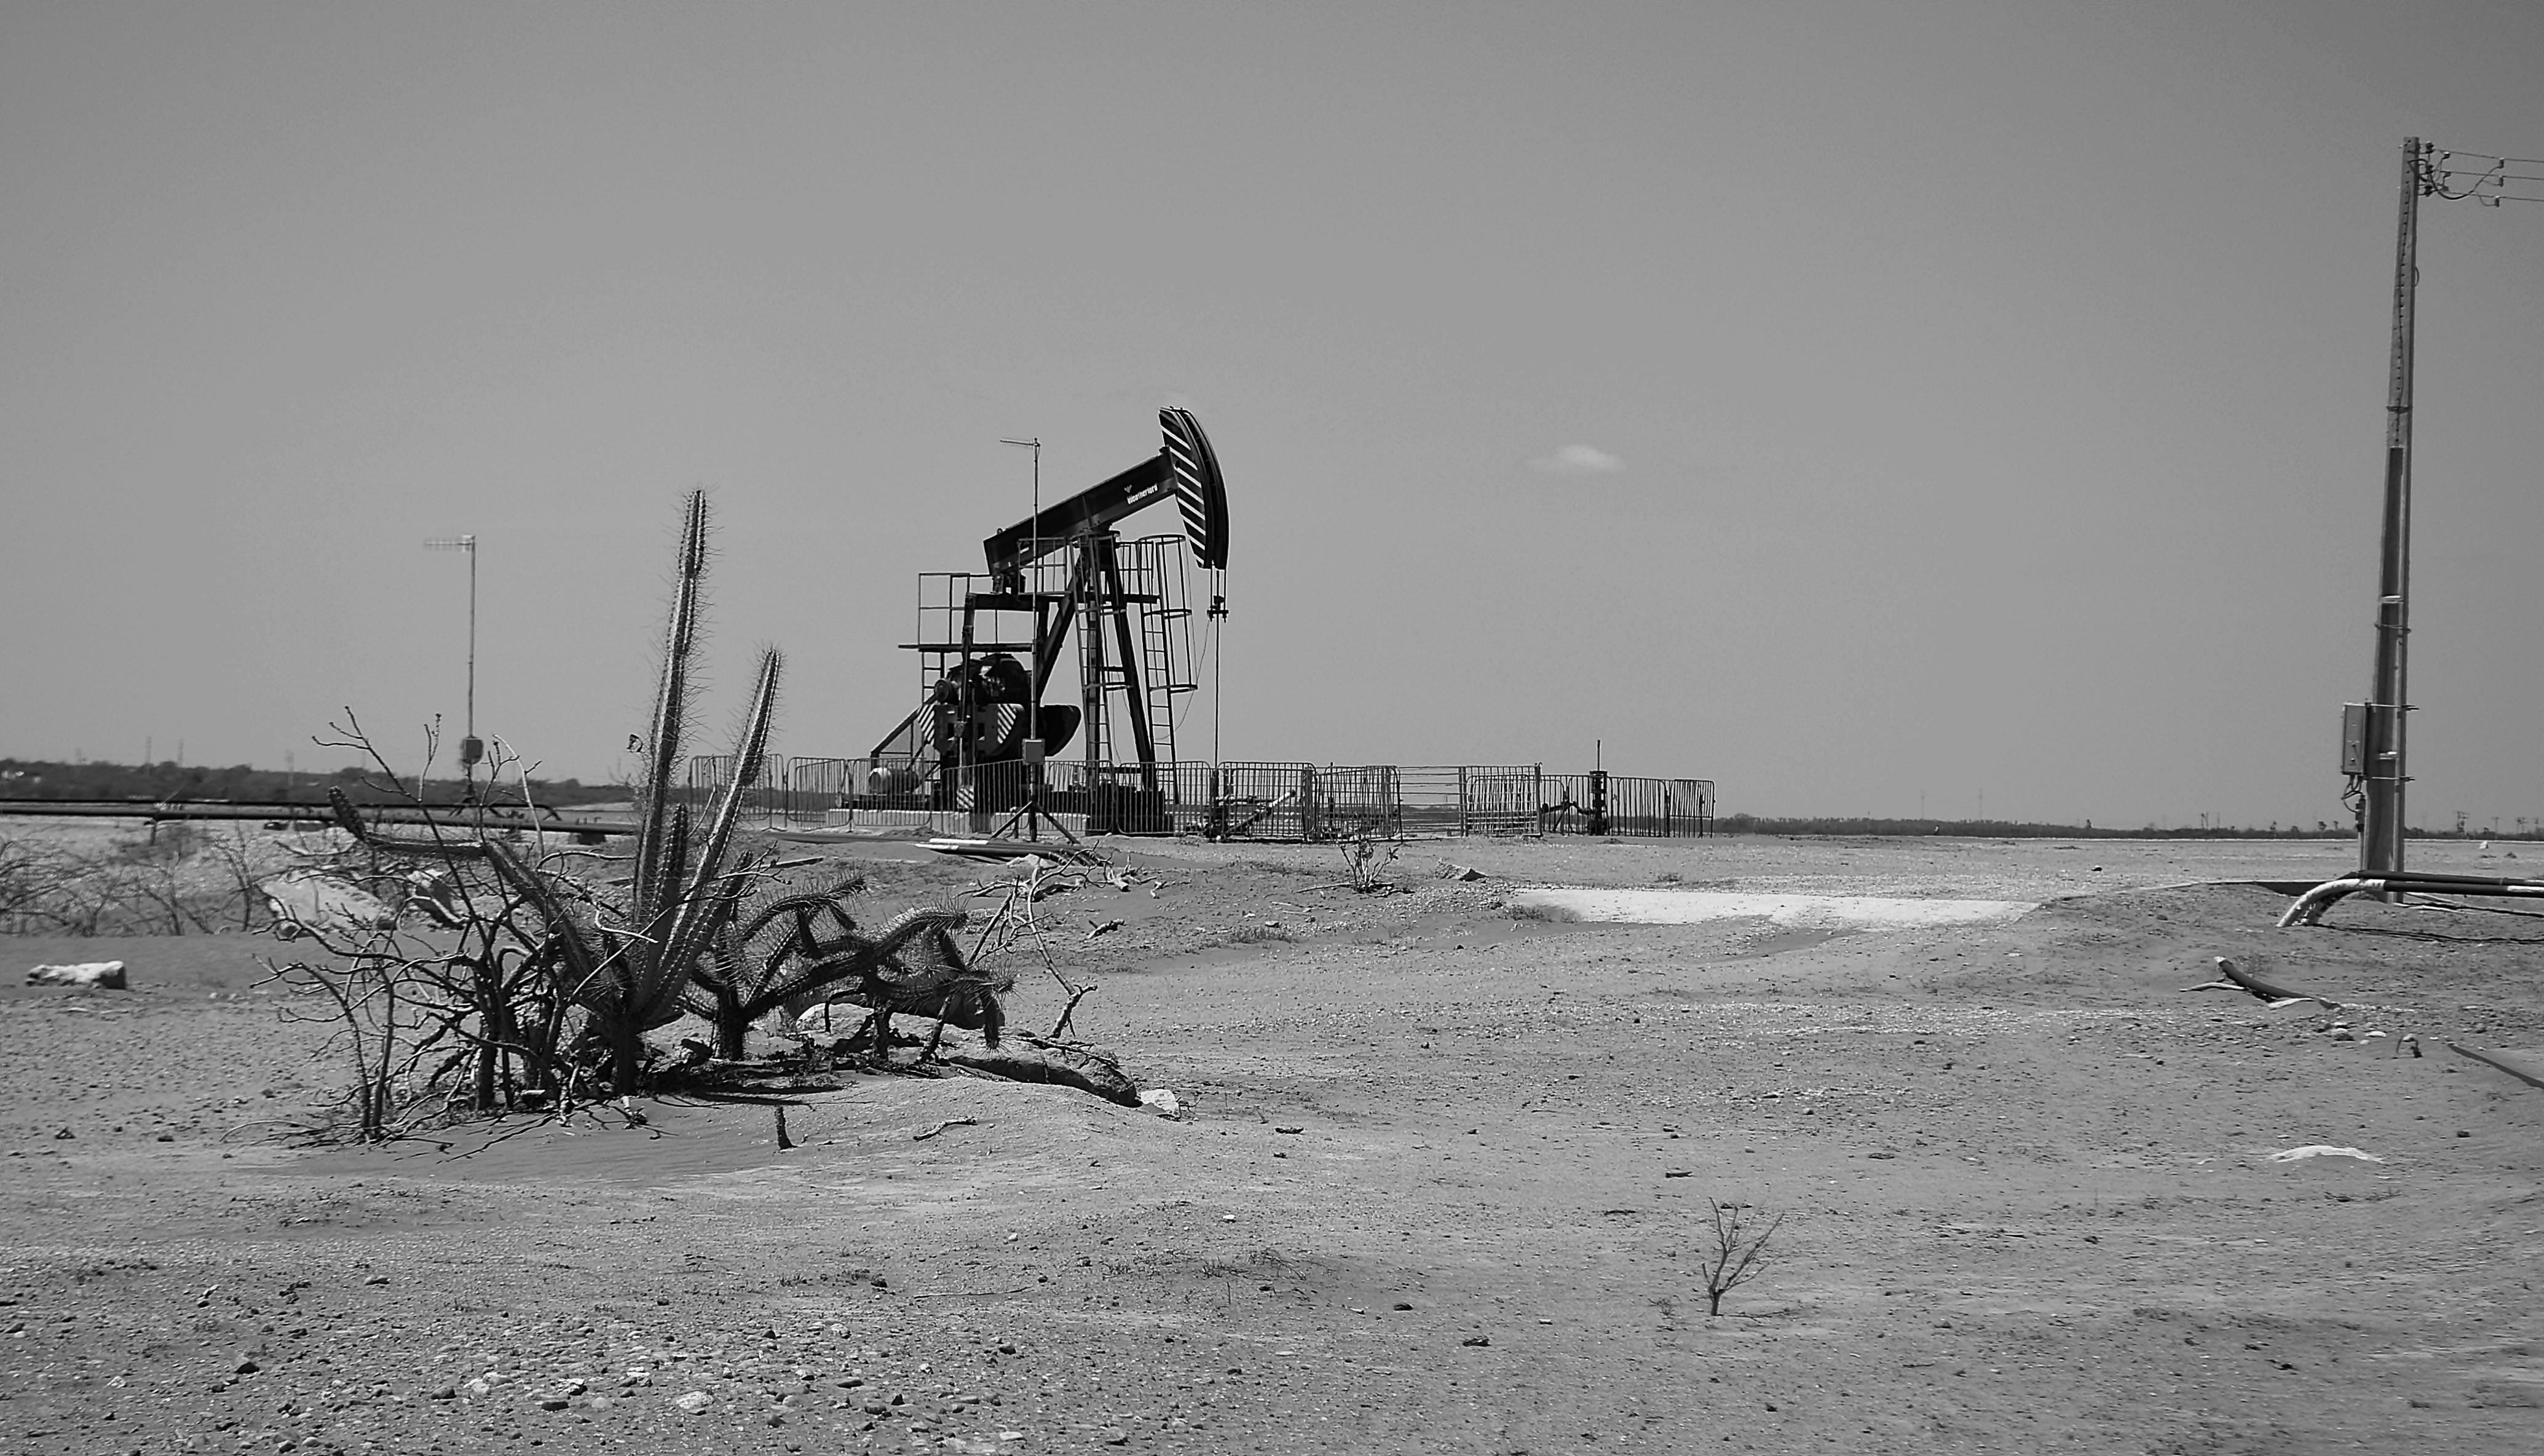 Free stock photo of oil field Brazil northwest.